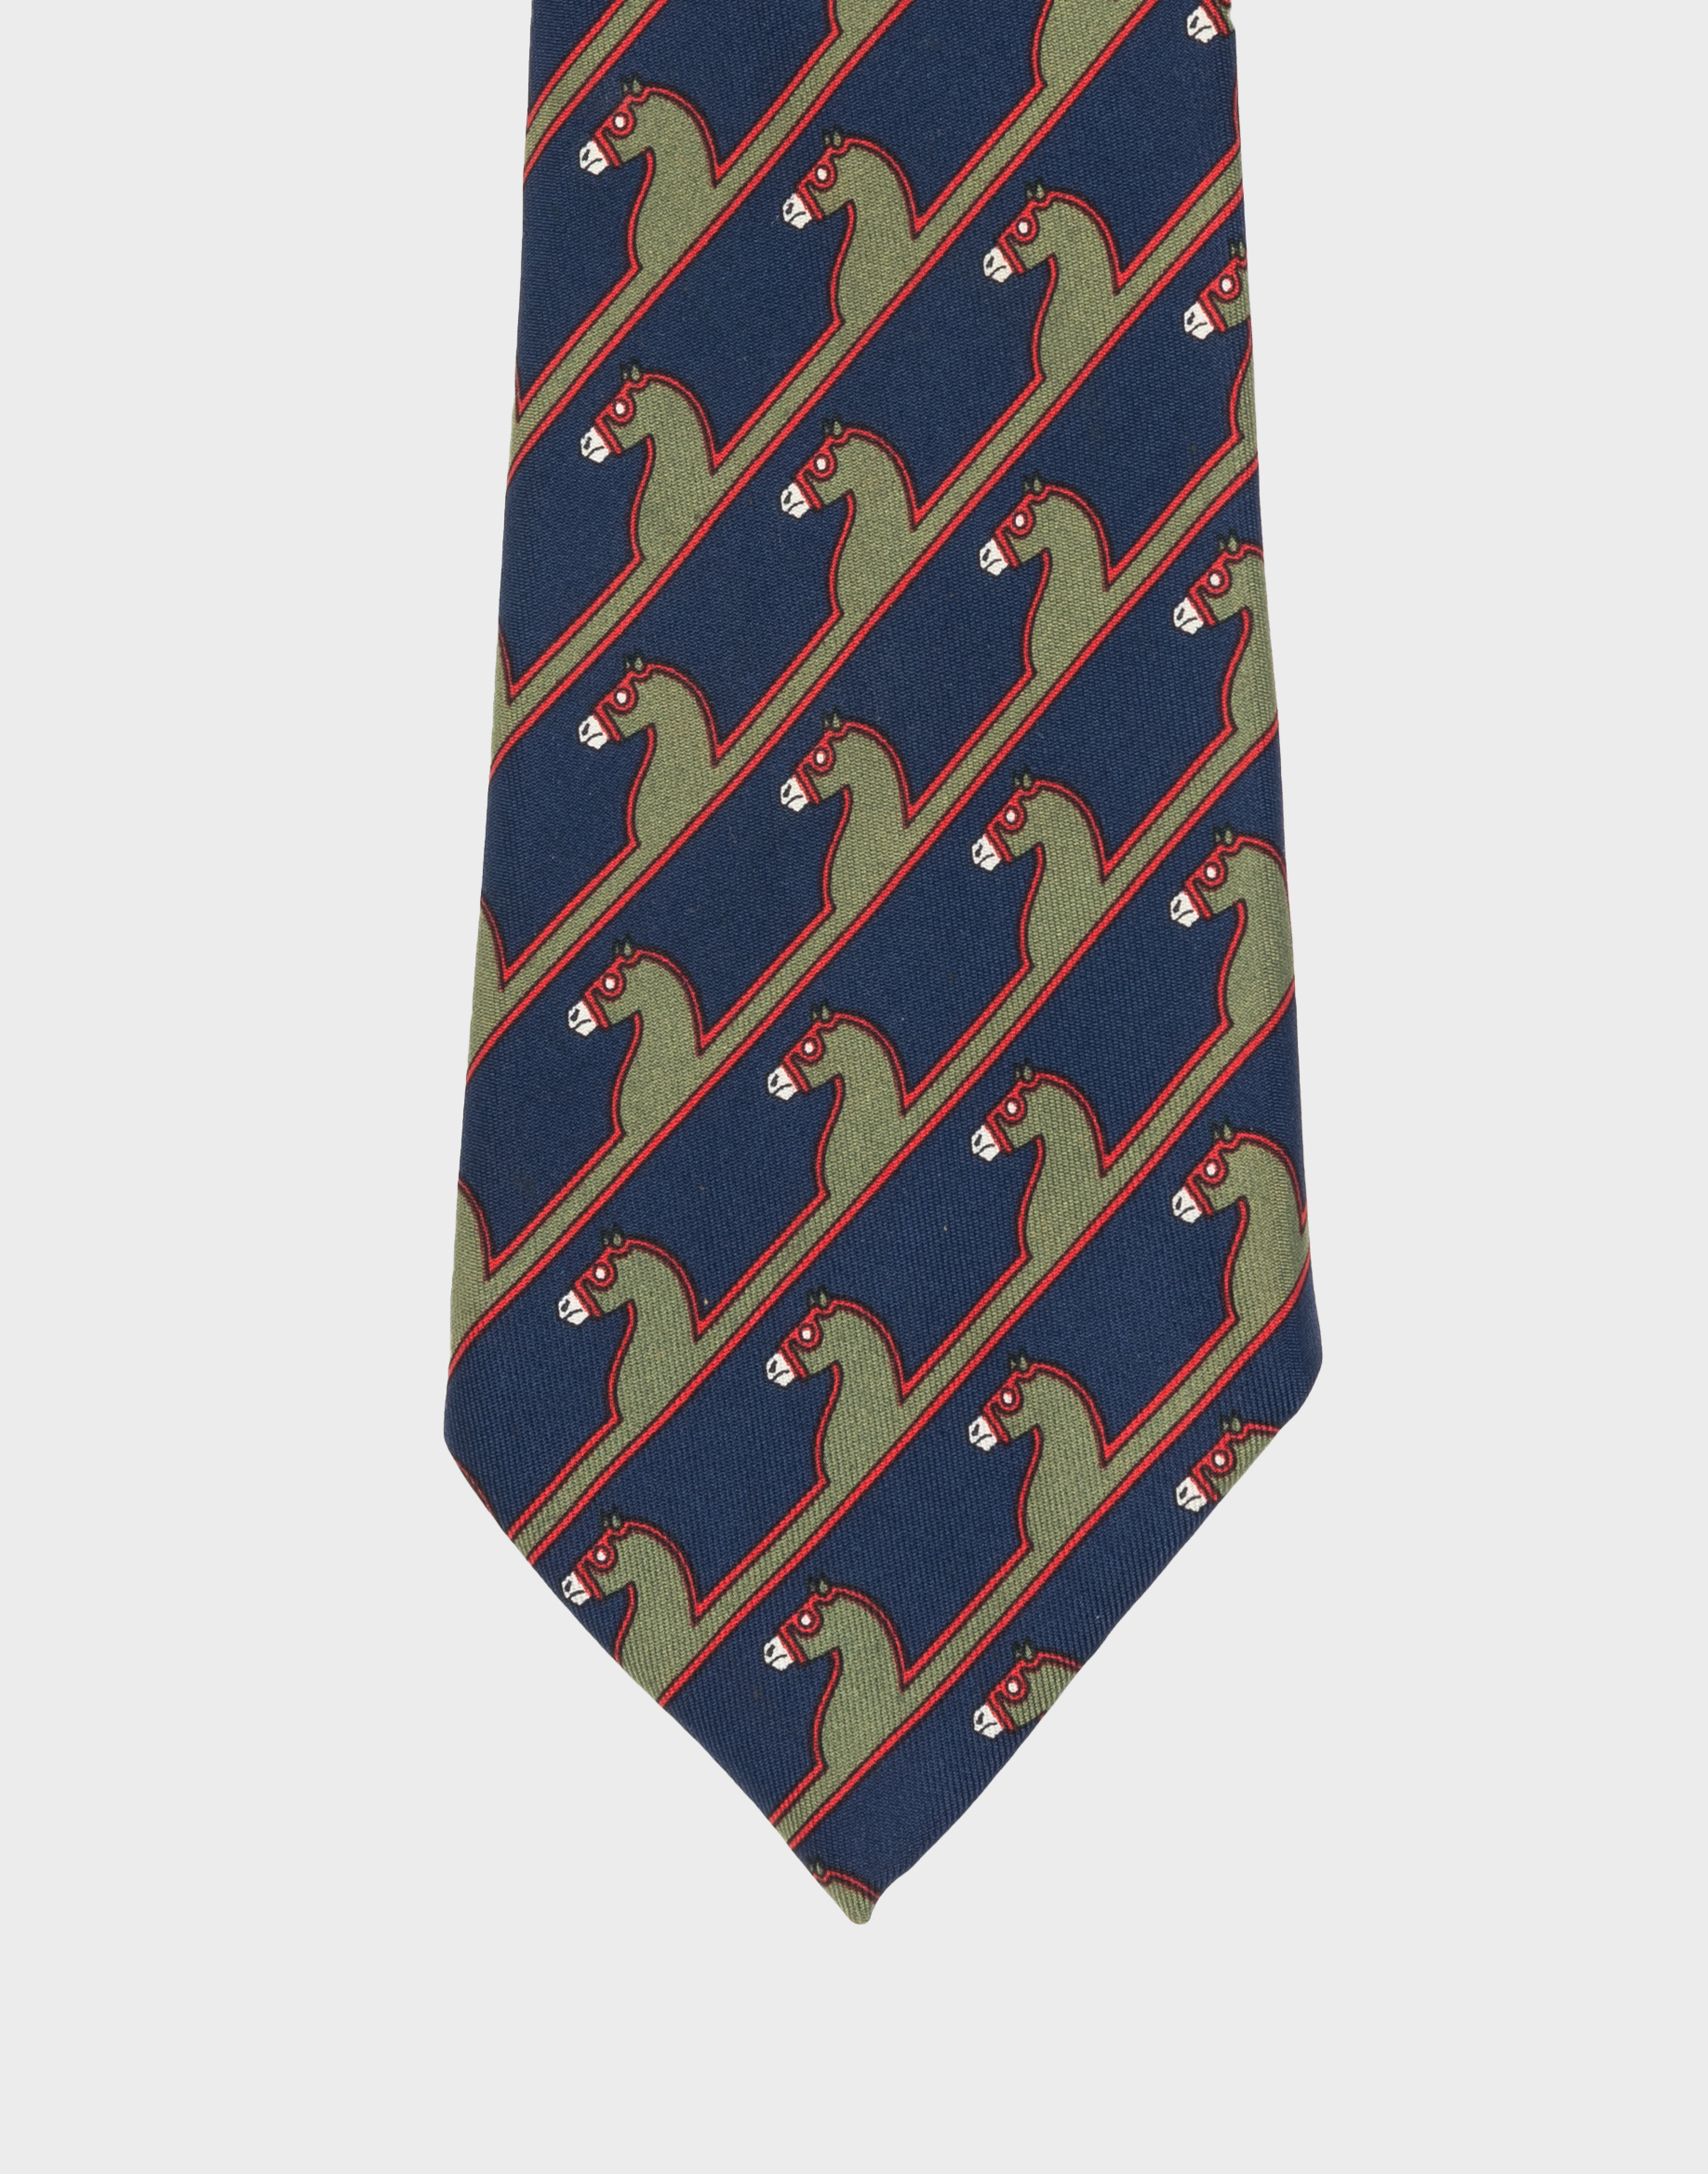 cravatta hermes blu in seta con stampa obliqua di cavalli